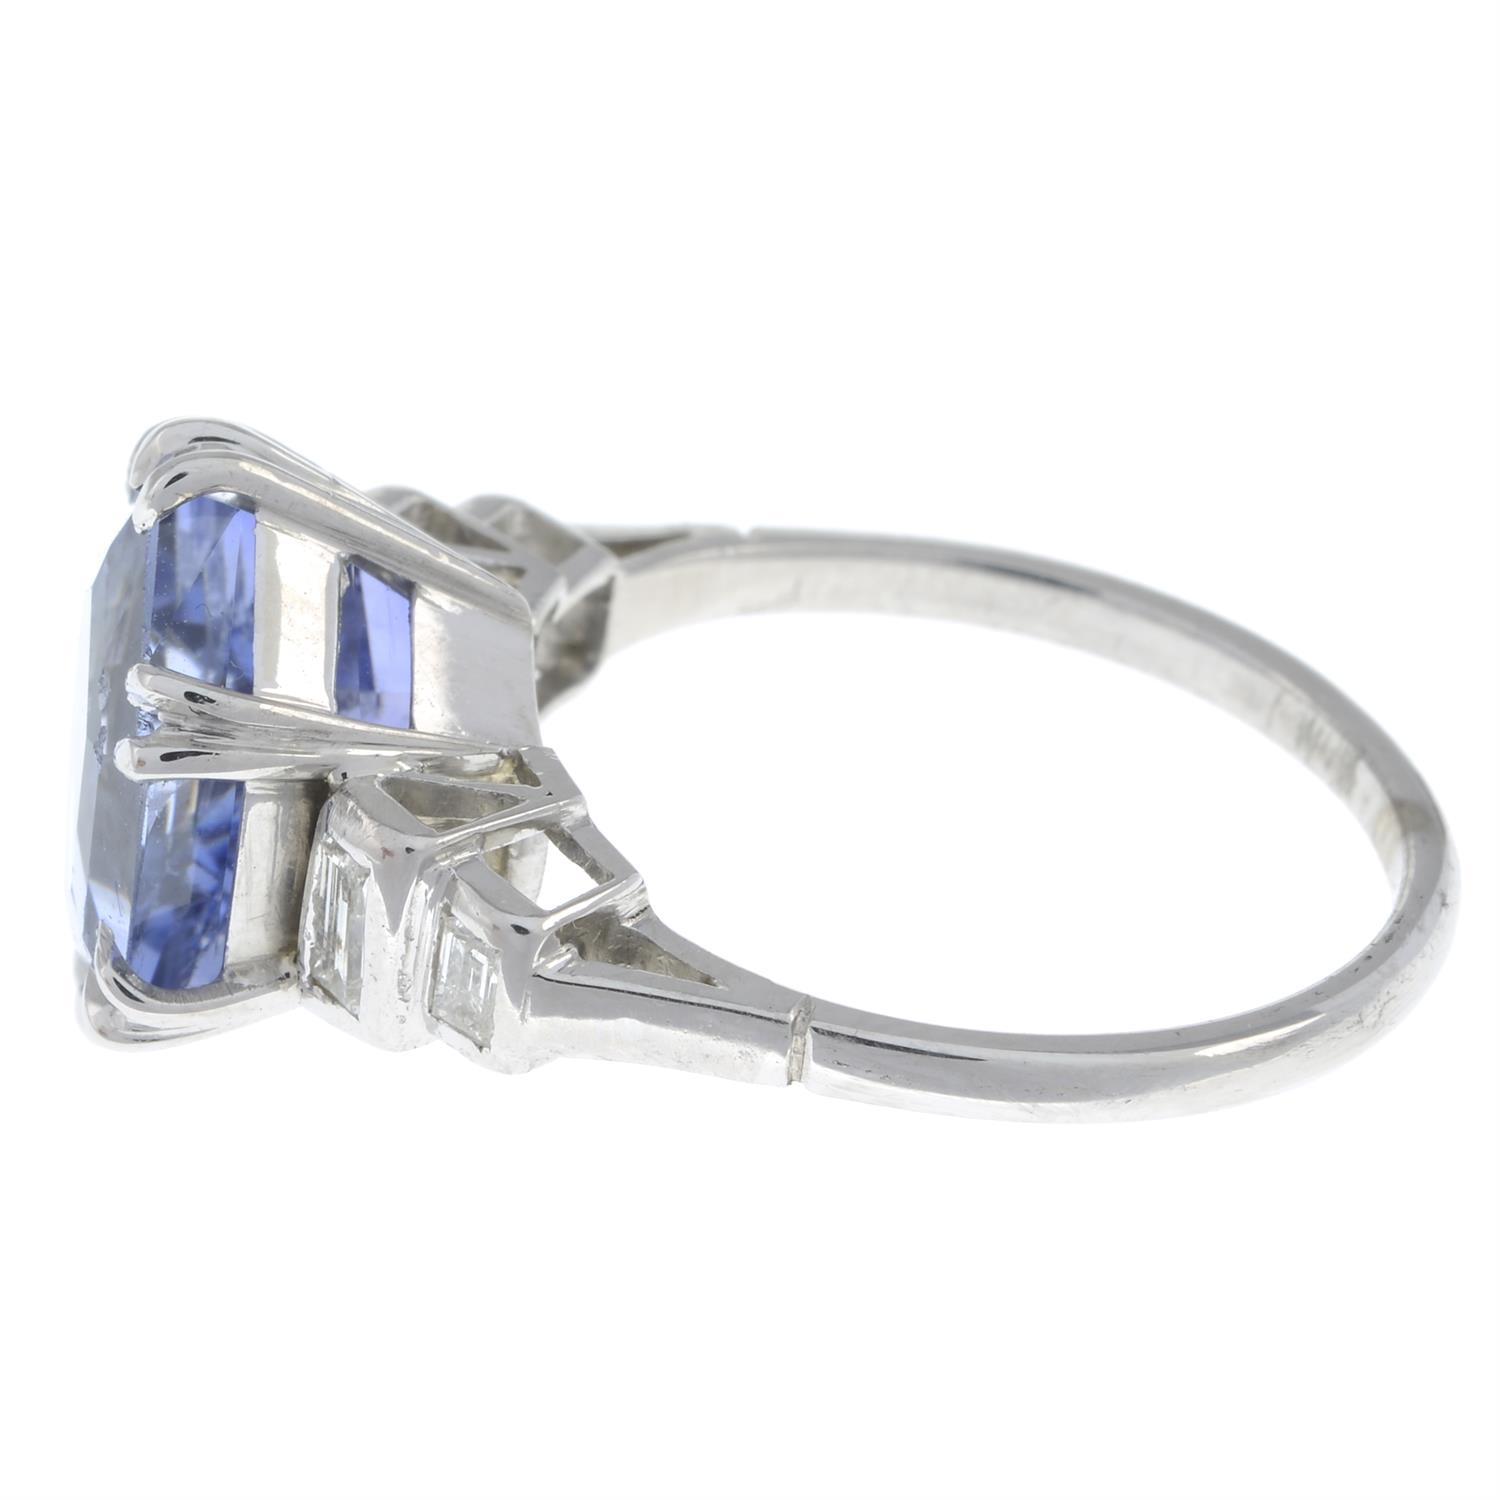 Sri Lankan sapphire and diamond ring - Image 4 of 4